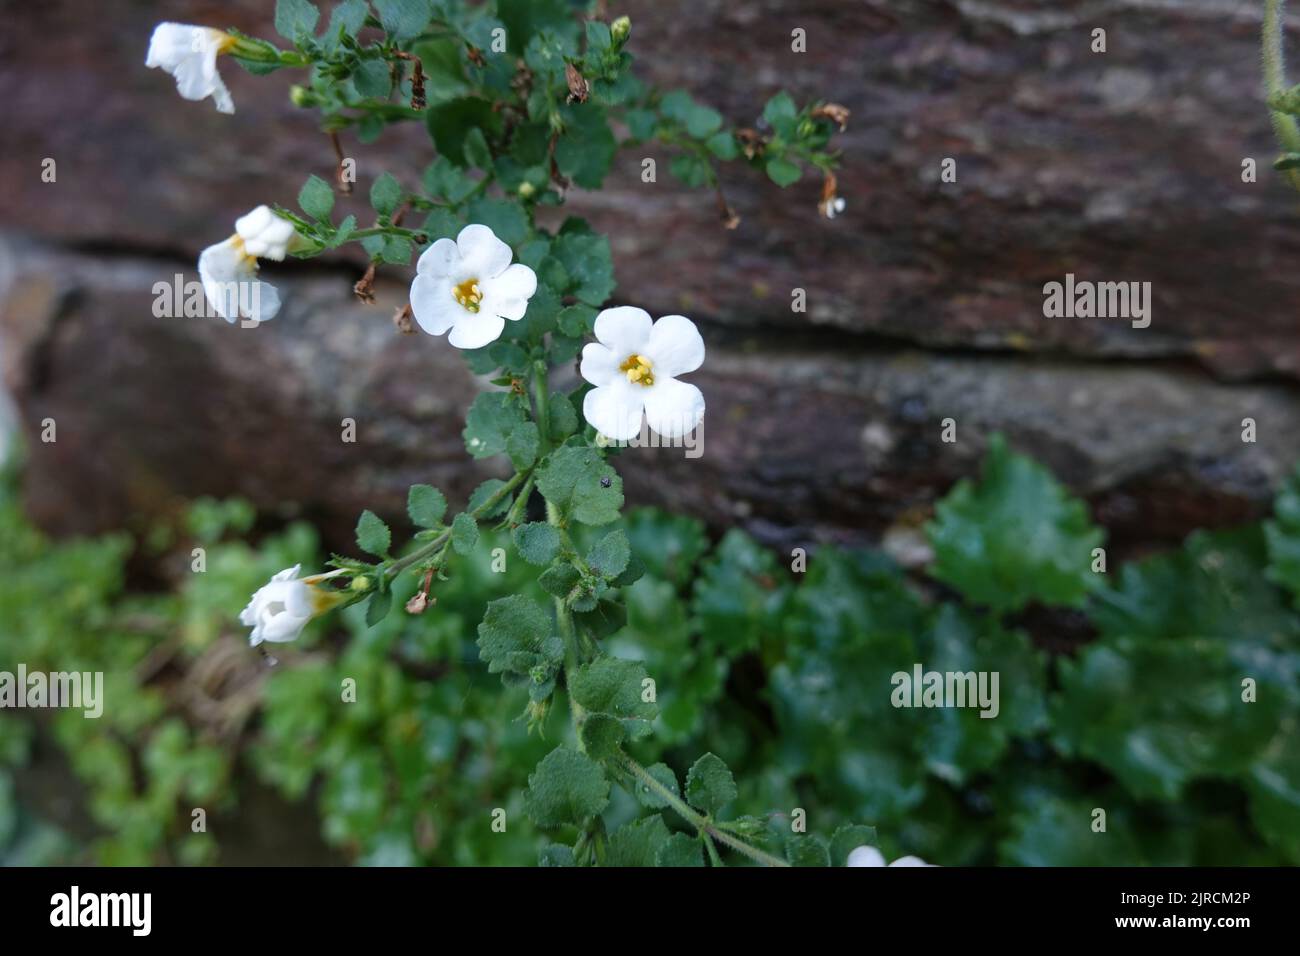 südafrikanische Herzblättrige Schneeflockenblume, auch Schneeflockenblume, (Chaenostoma cordatum, Syn. Manulea cordata, Sutera cordata) Stock Photo